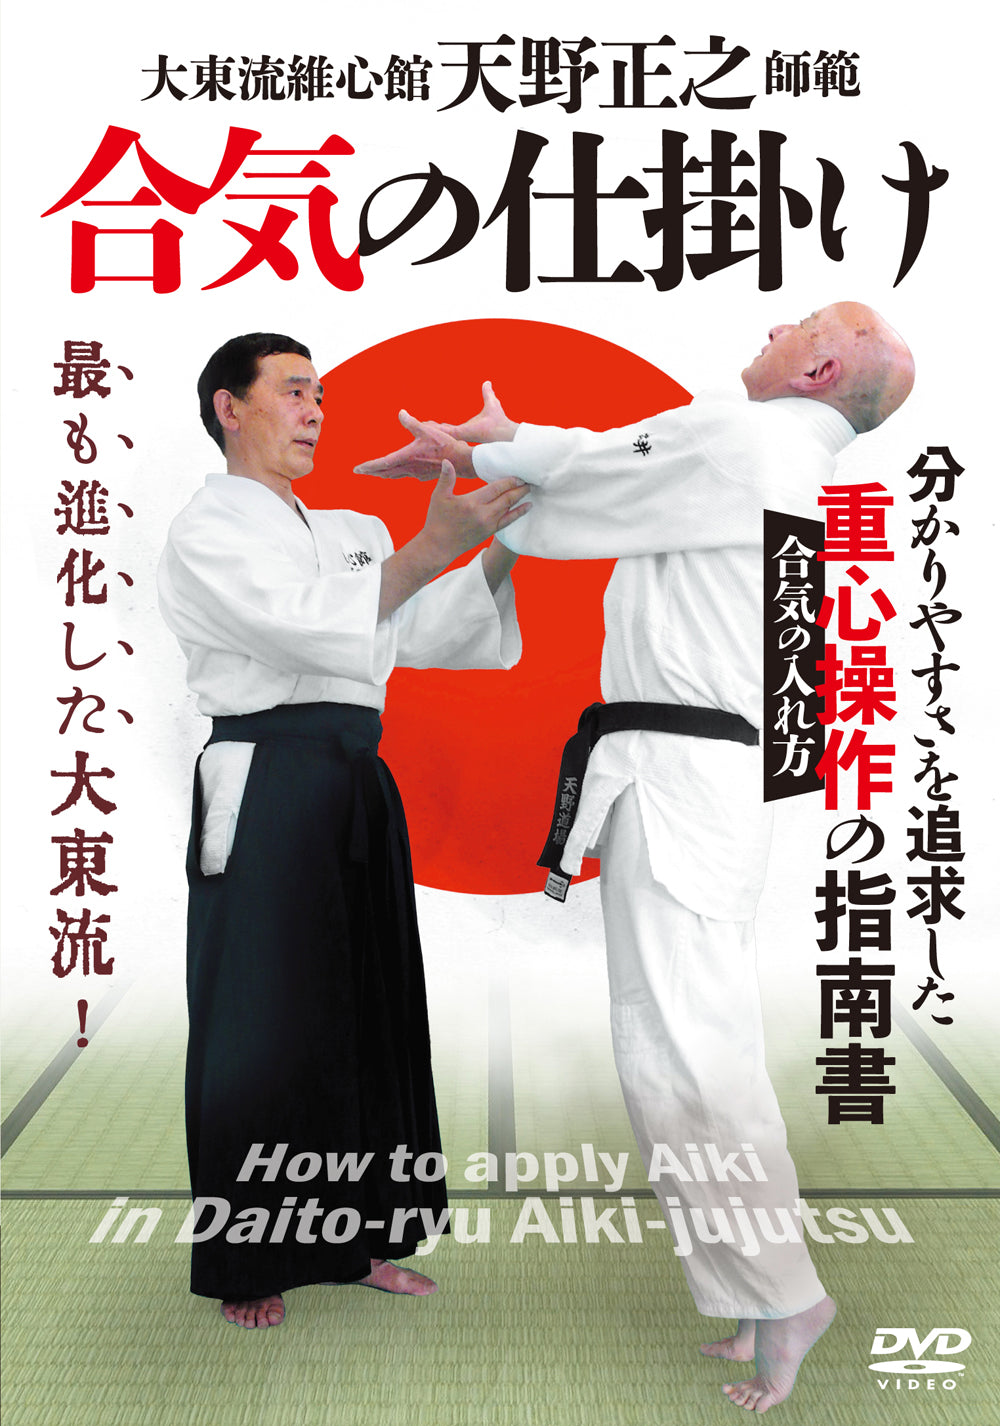 How to Apply Aiki in Daito Ryu Aikijujutsu DVD by Masayuki Amano